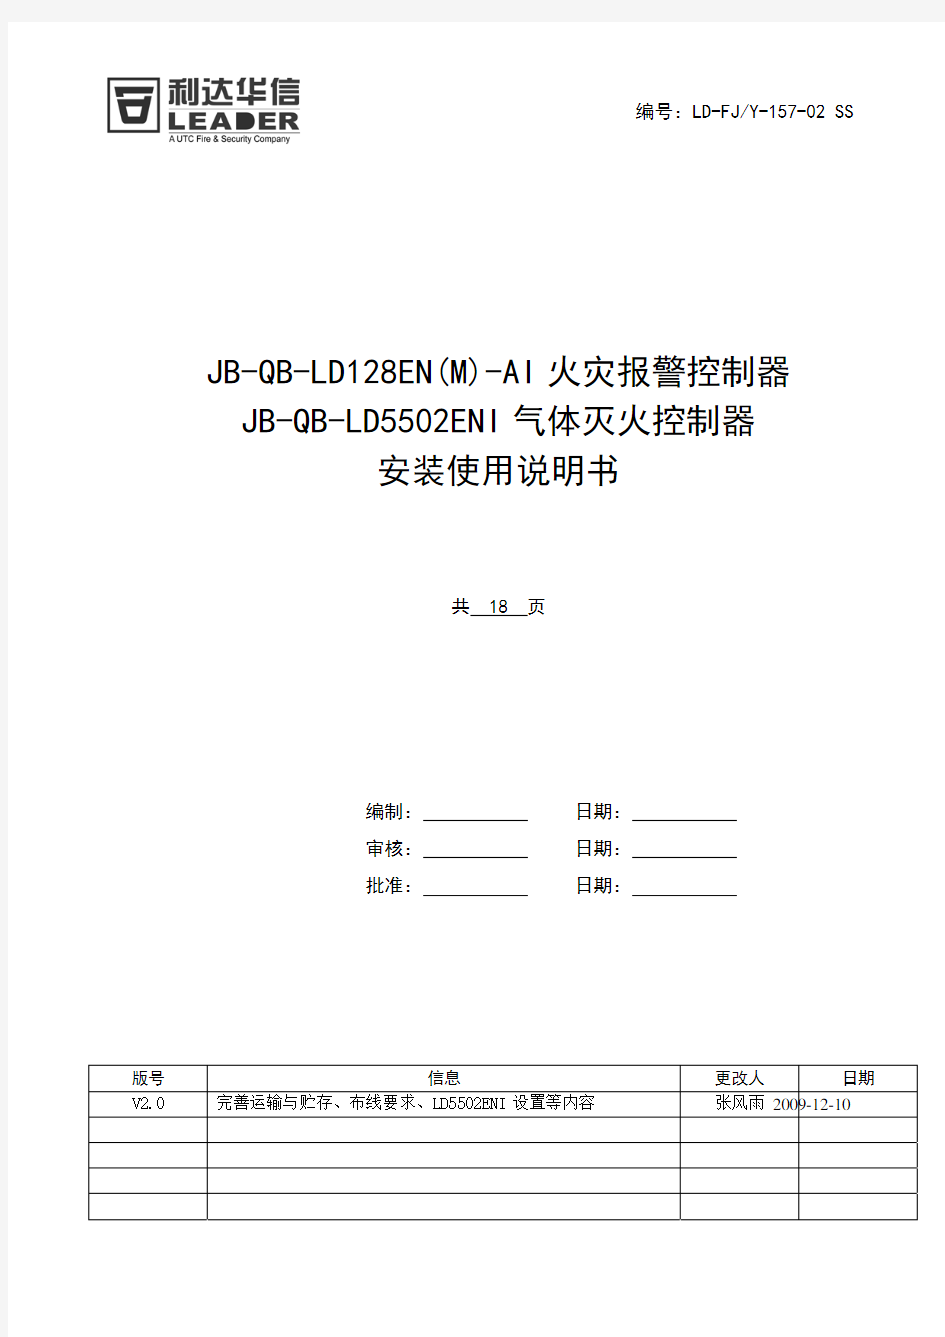 JB-QB-LD128EN(M)-AI火灾报警控制器-JB-QB-LD5502ENI气体灭火控制器安装使用说明书1001版